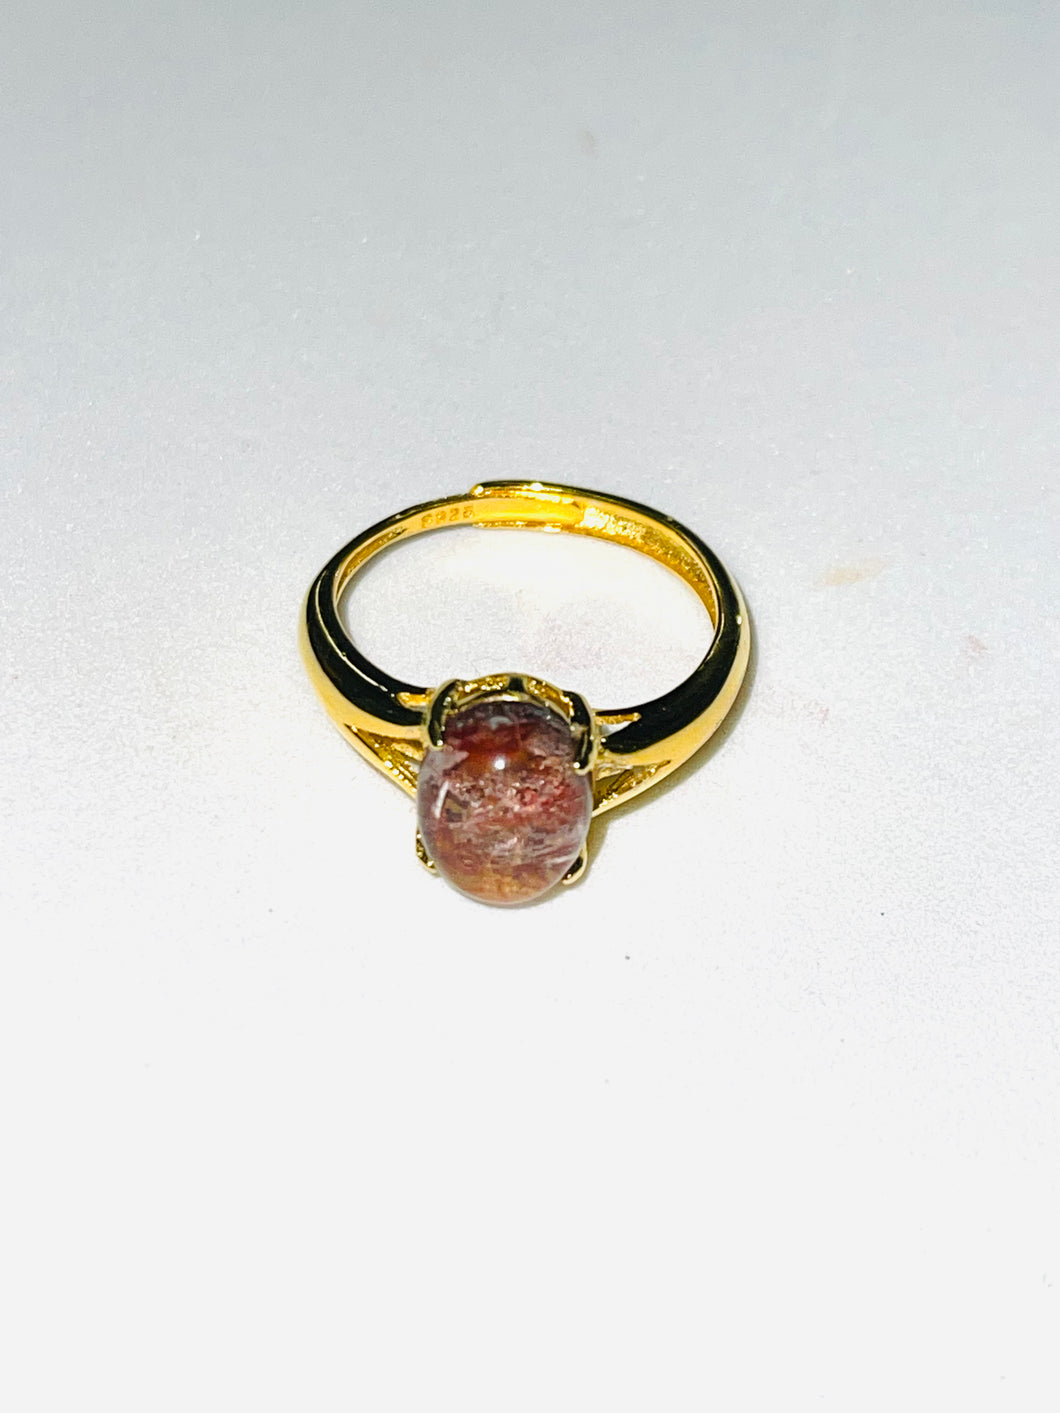 Ring with golden rutilated quartz